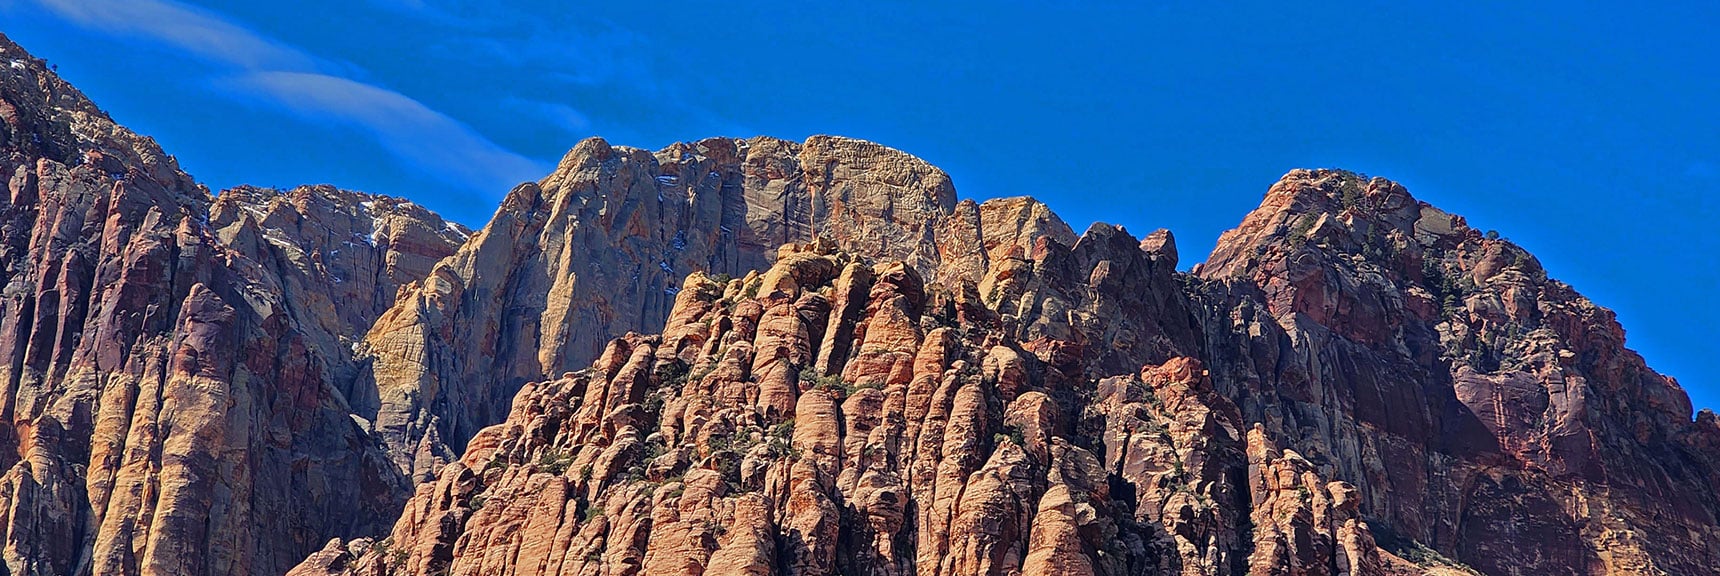 Juniper Peak Summit Area; Rainbow Wall Background | Dales Trail | Red Rock Canyon National Conservation Area, Nevada | David Smith | LasVegasAreaTrails.com